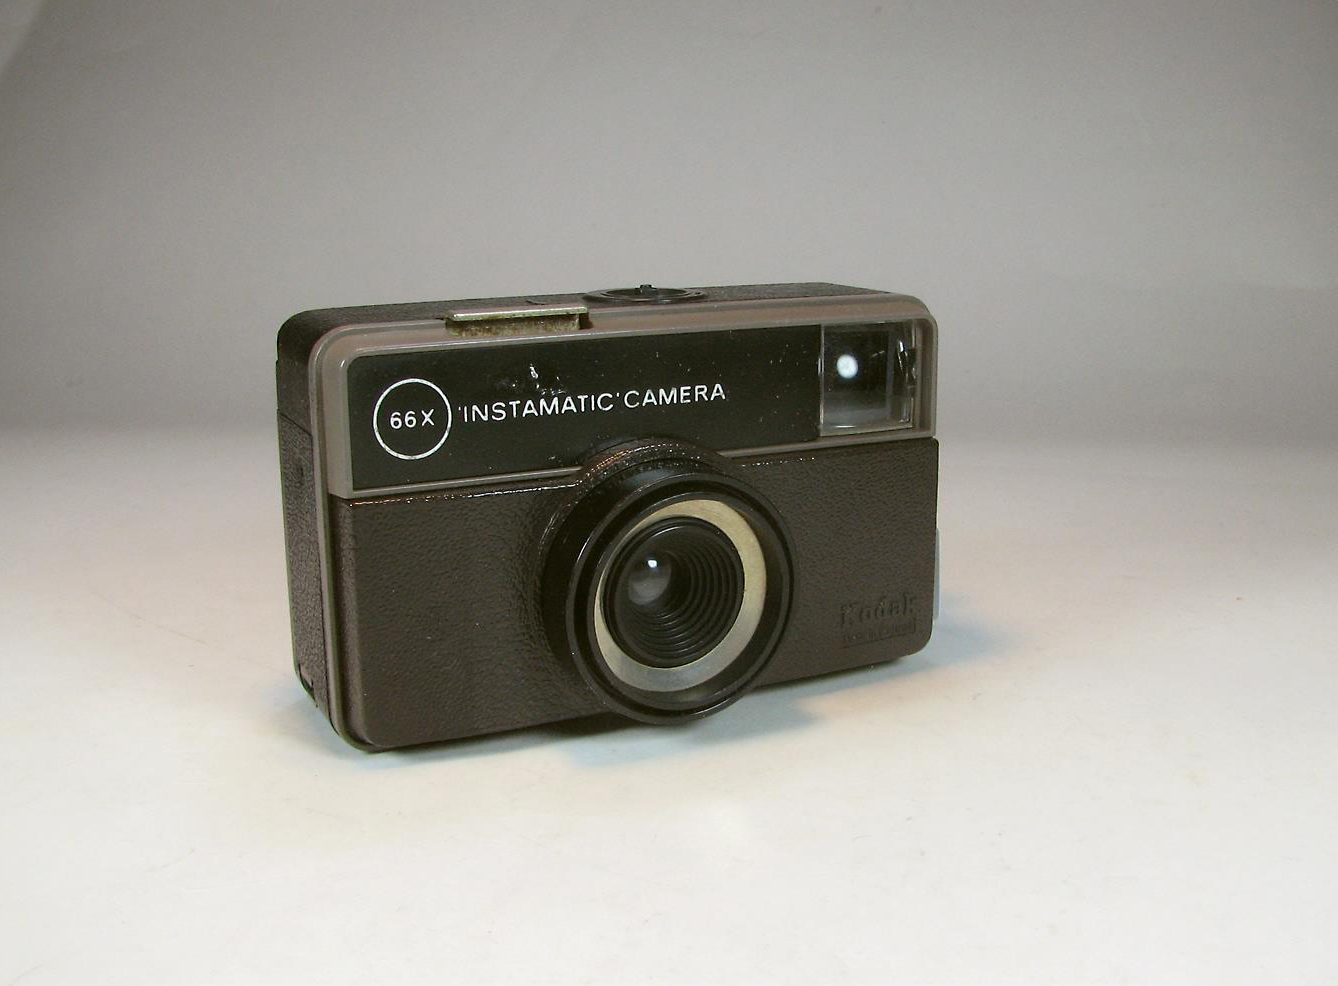 دوربین Kodak INSTAMATIC 66X انگلستان